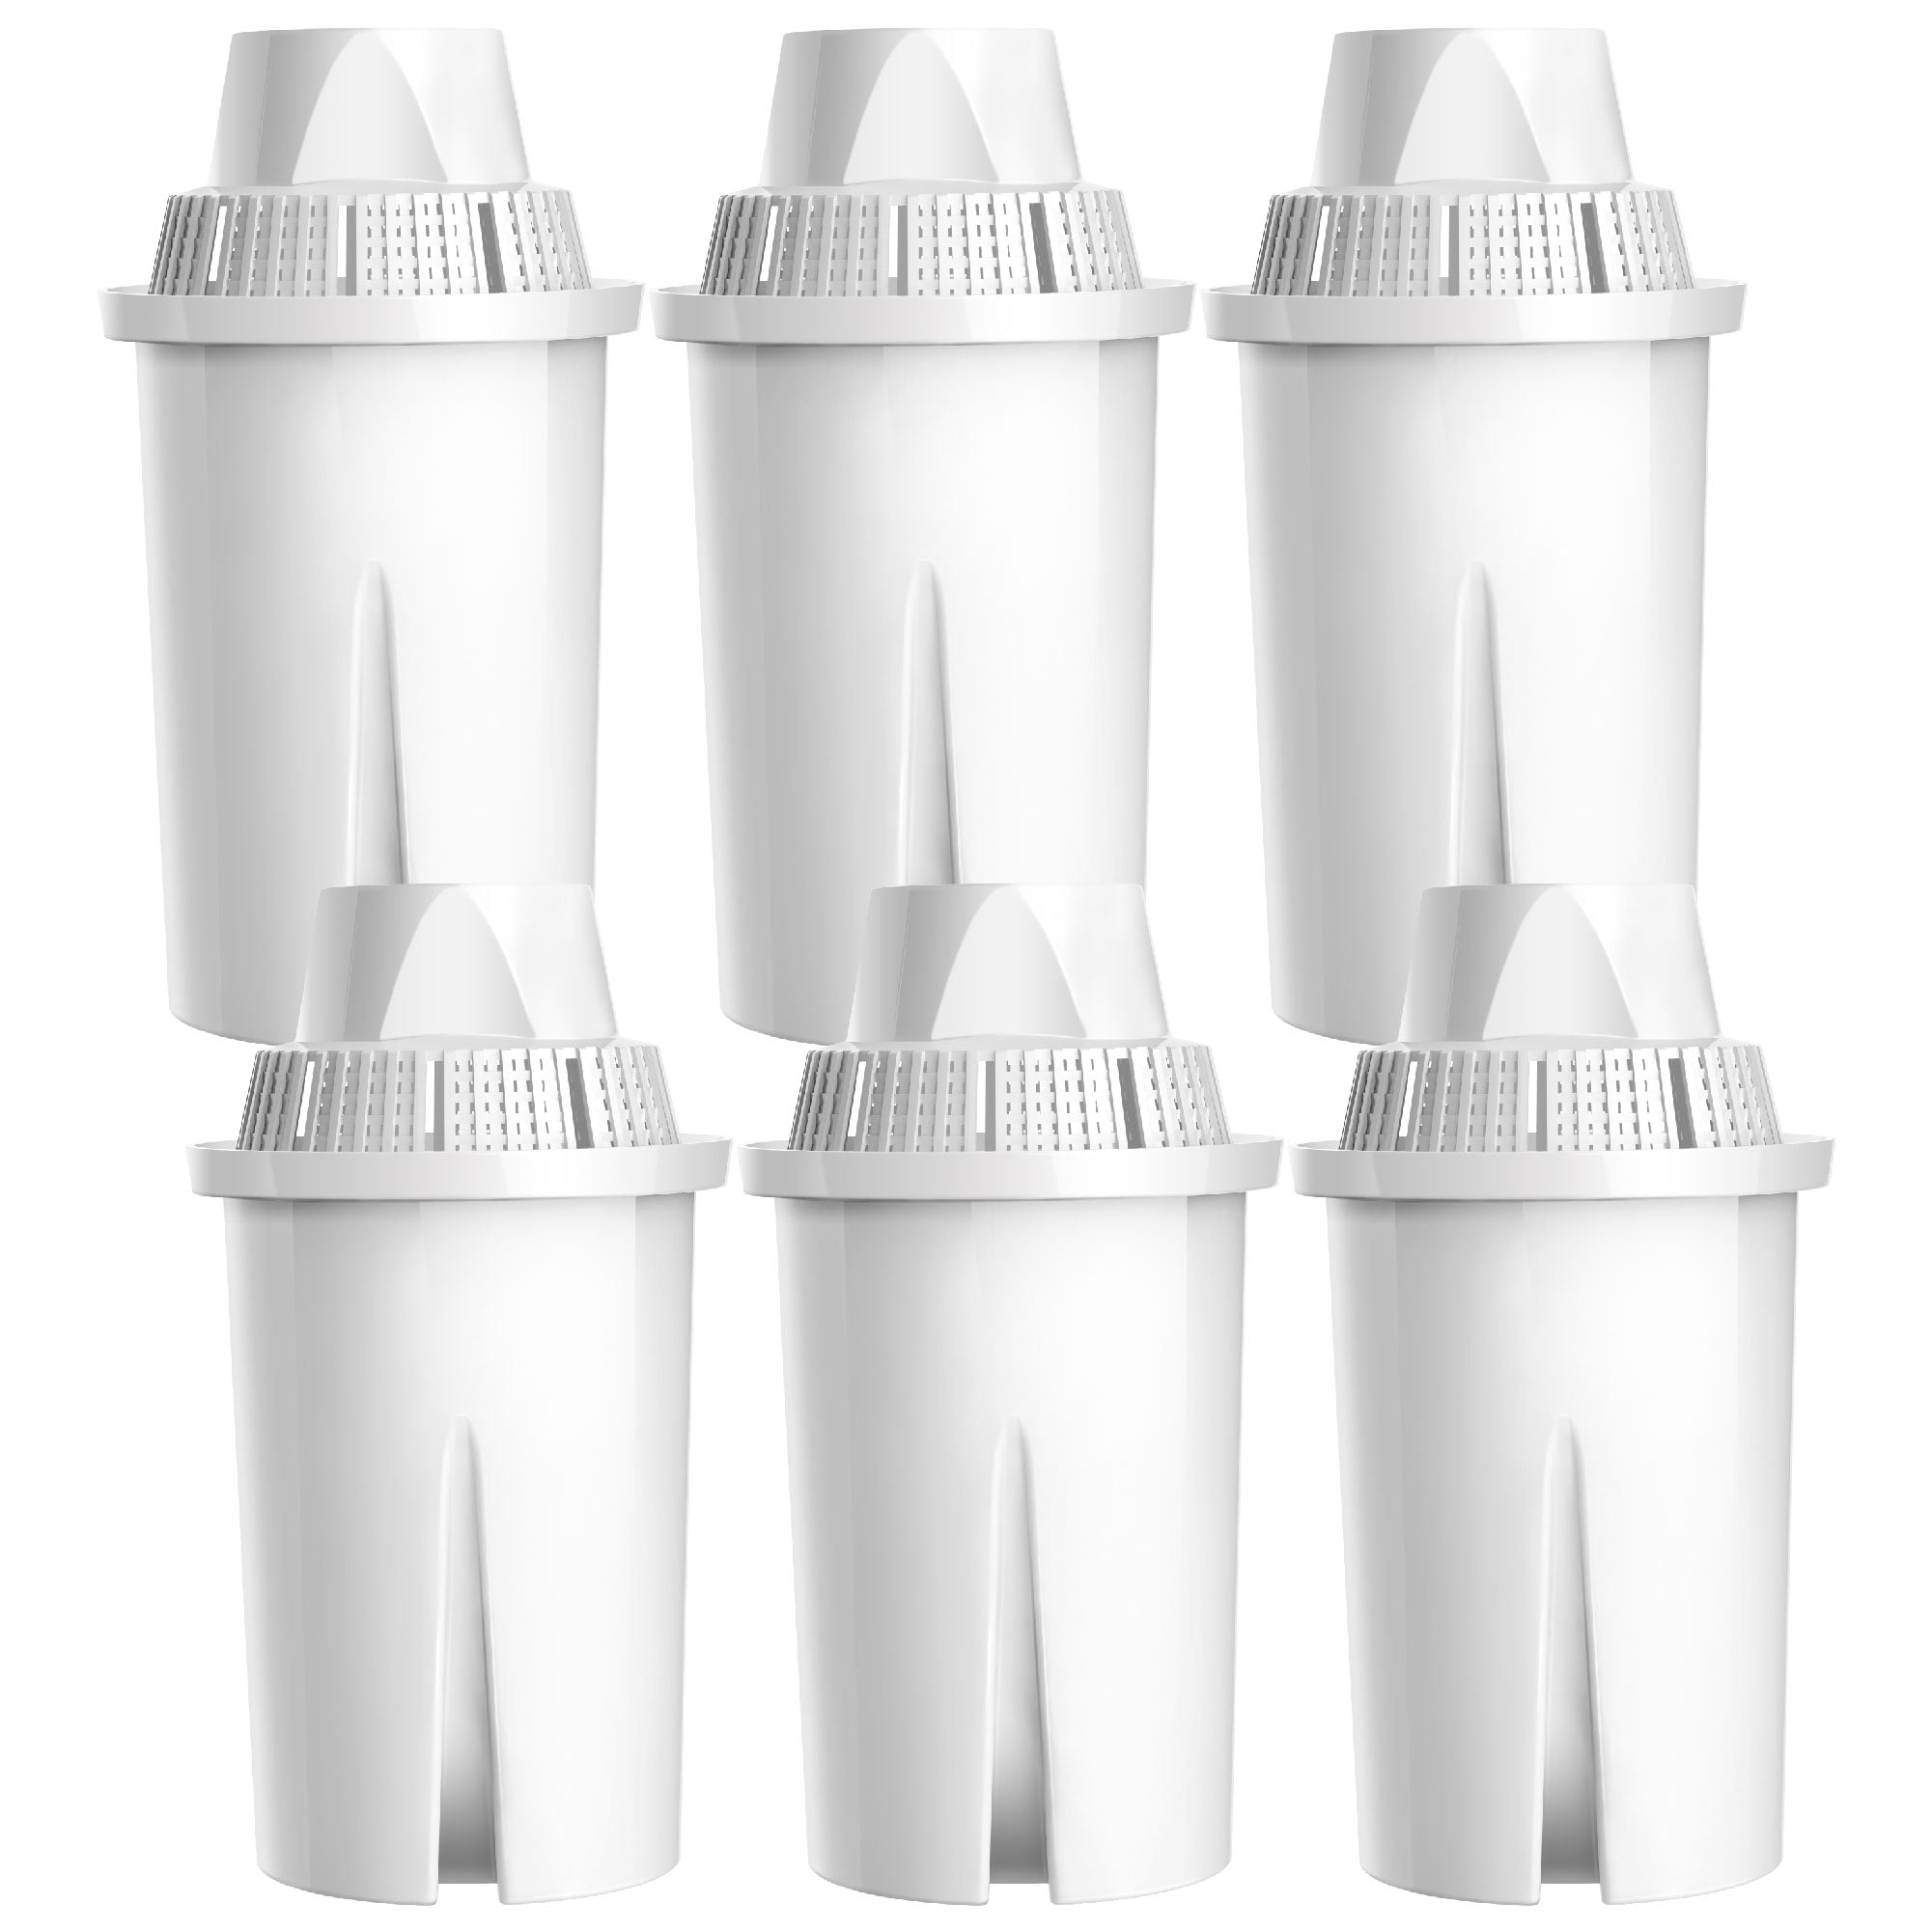 6 Pack Aquacrest Water Filter Replacement For Brita